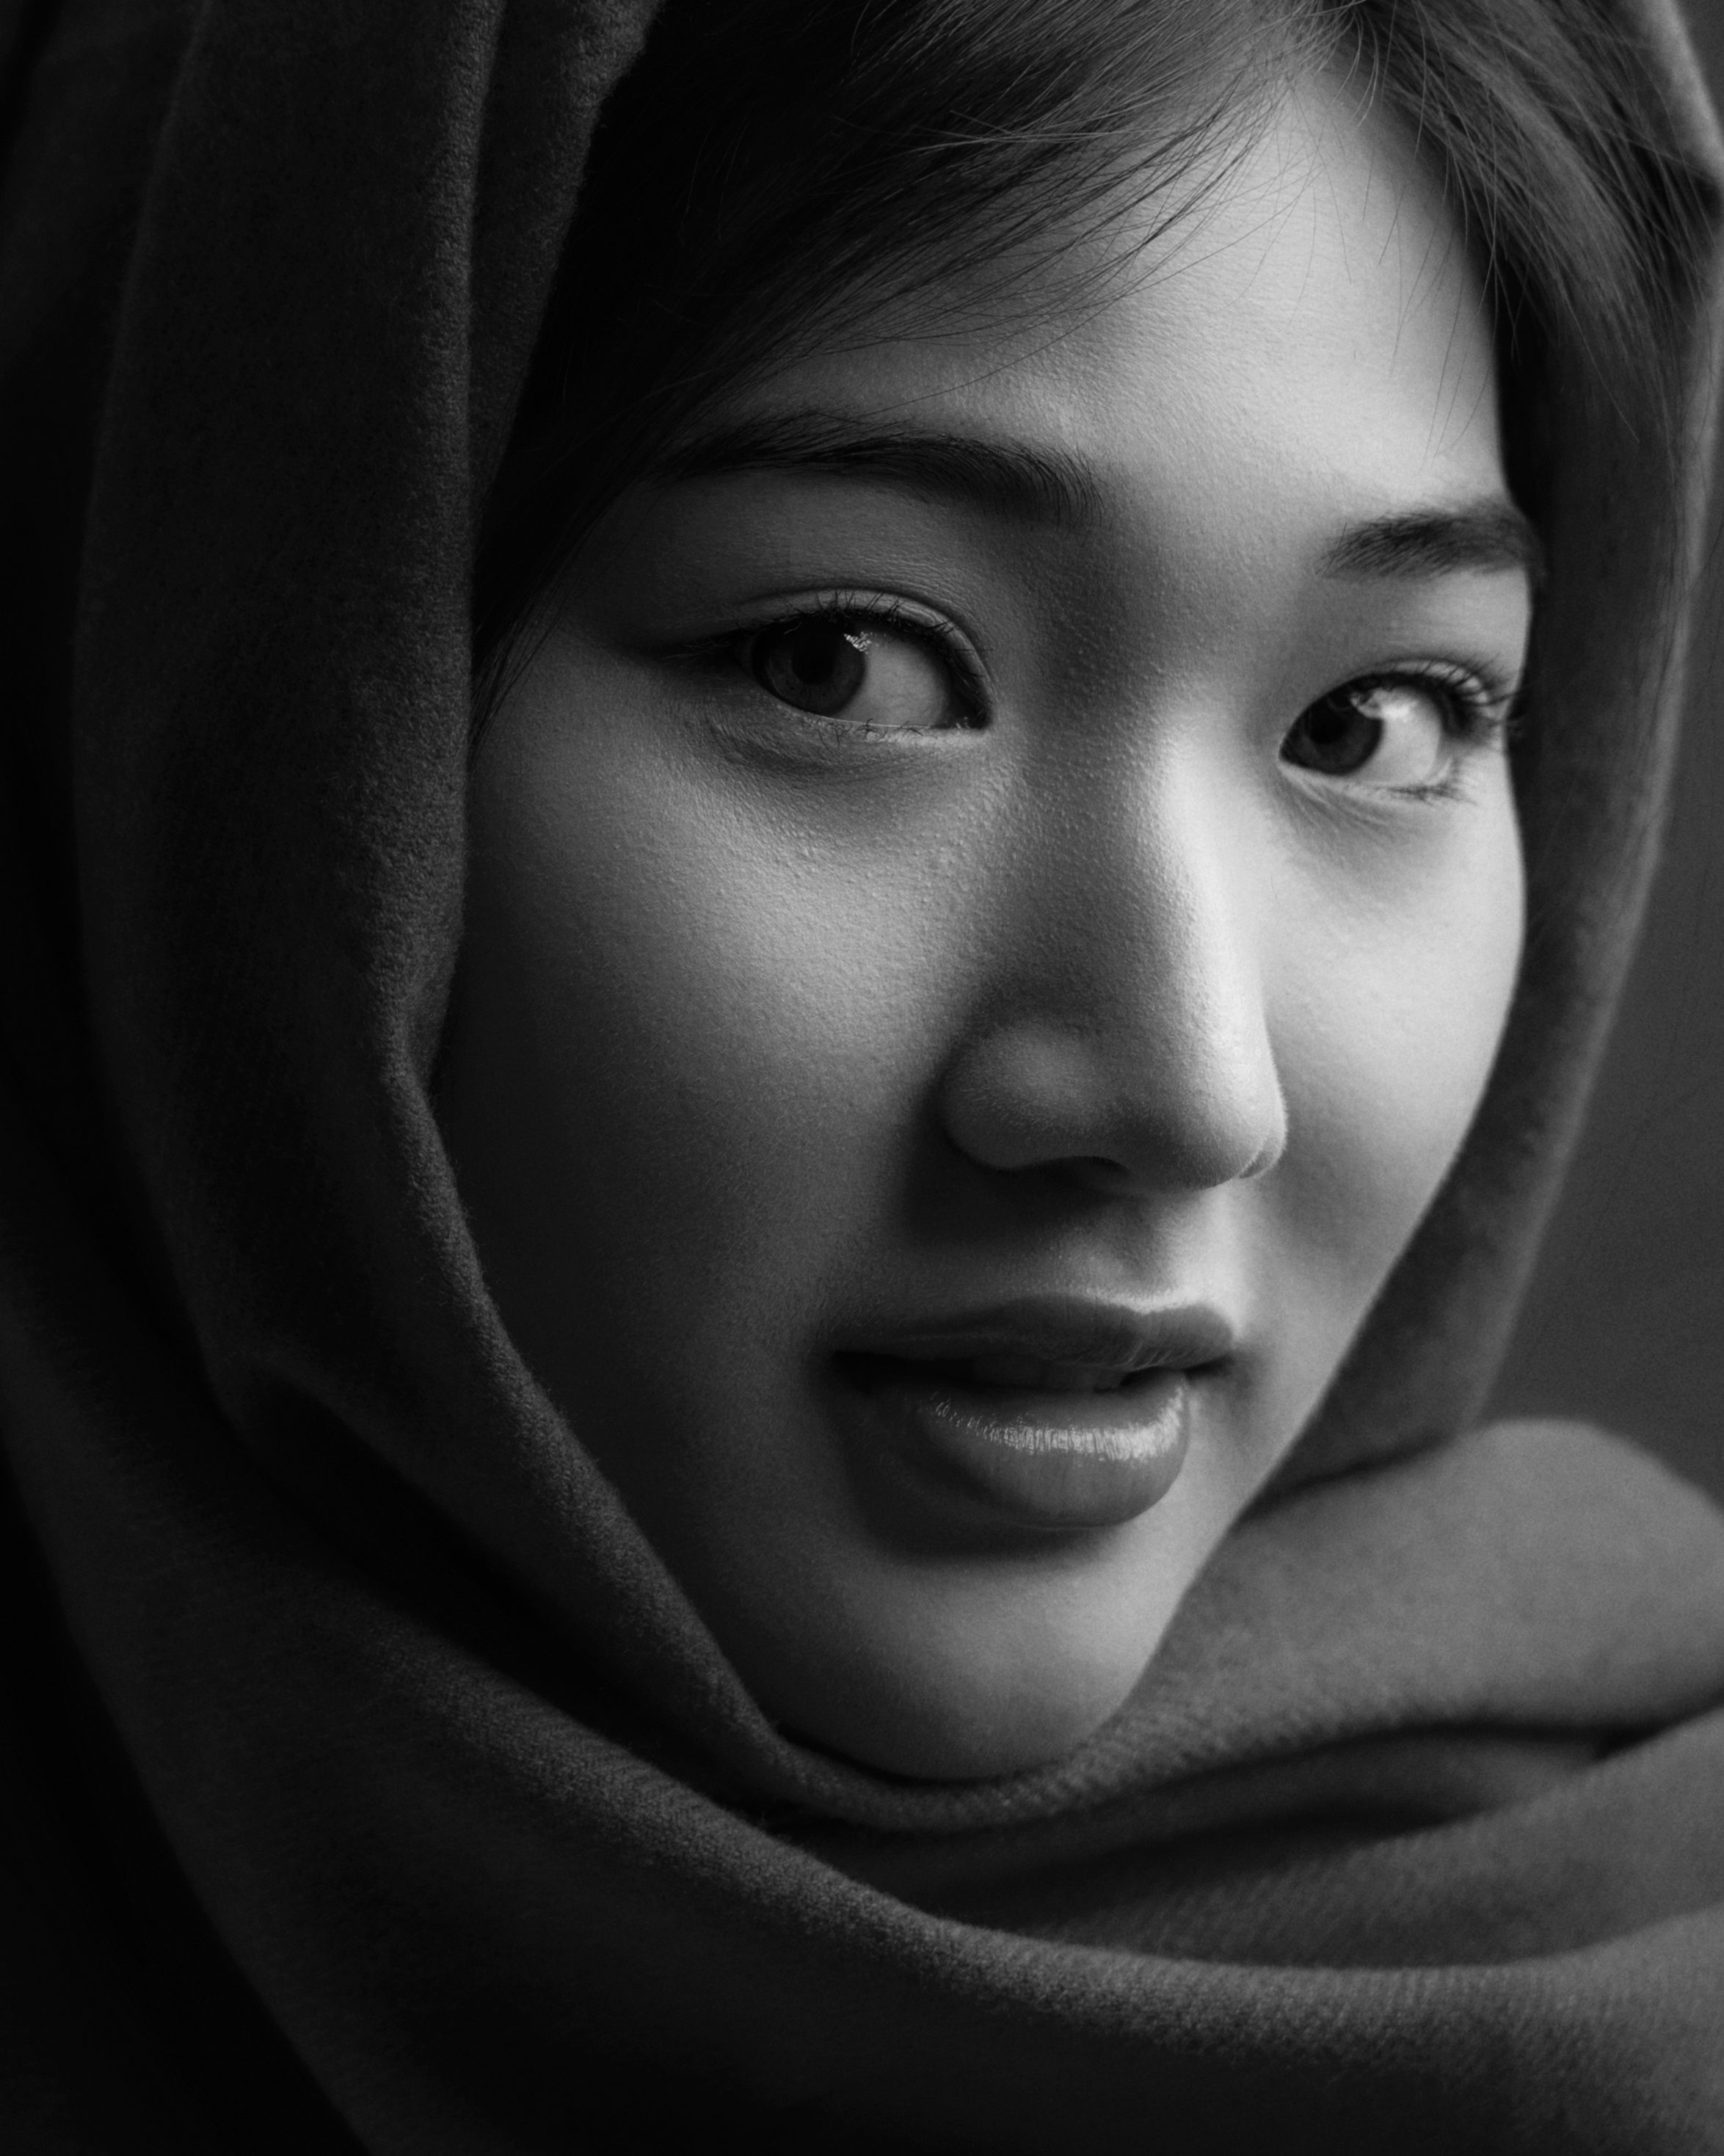 portrait, mood portrait, face, mood, asian, vietnamese, vietnam, eyes, close up, headshot, face, beauty, bw, black and white, monochrome, Nguyen Hoang Viet